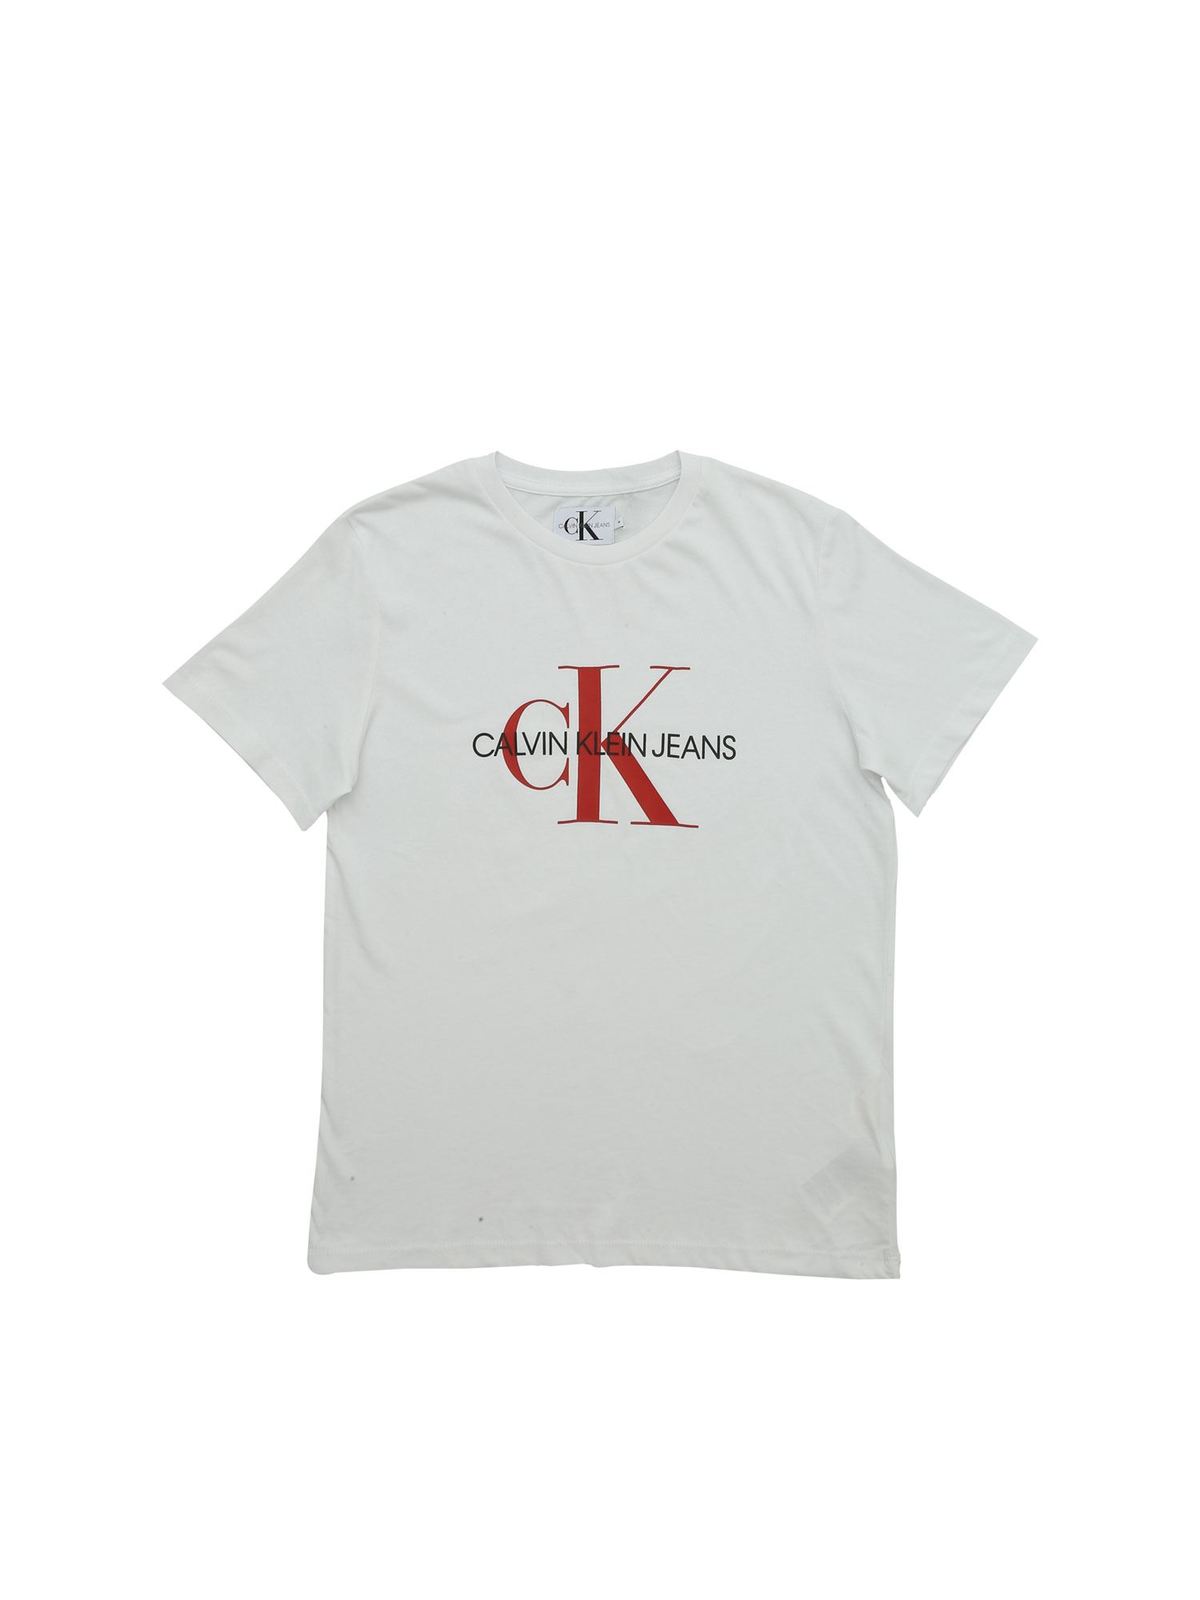 Post impressionisme radium bolvormig T-shirts Calvin Klein Jeans - White T-shirt with red CK print -  1G01G00299100